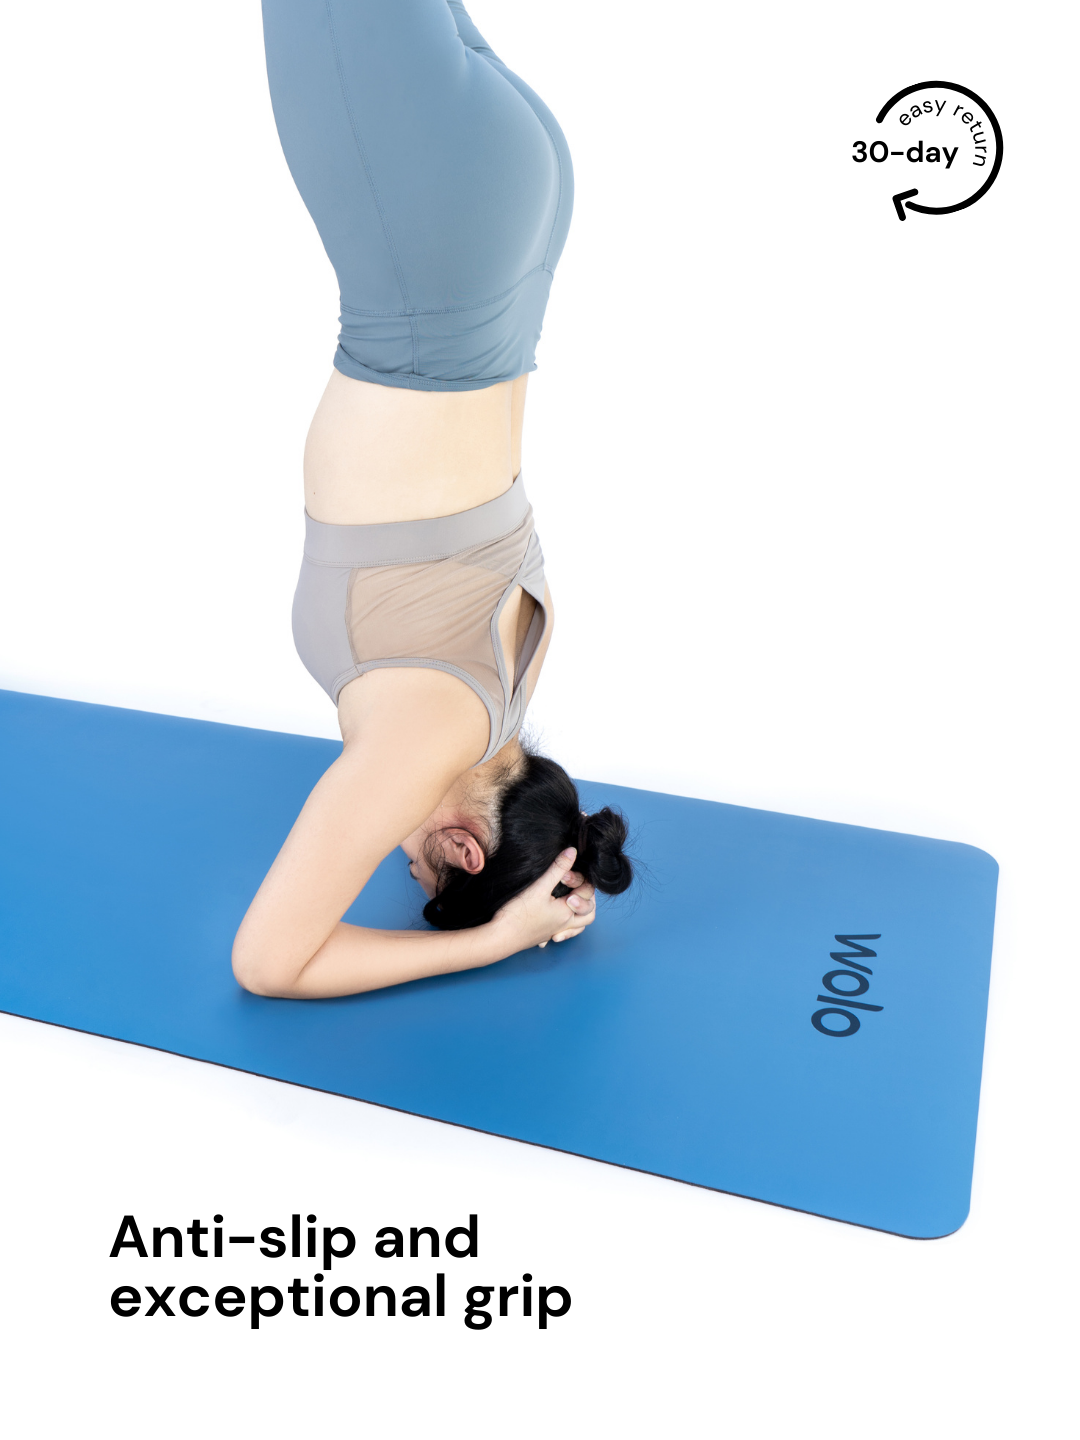 Lady doing yoga on an alaskan blue yoga mat